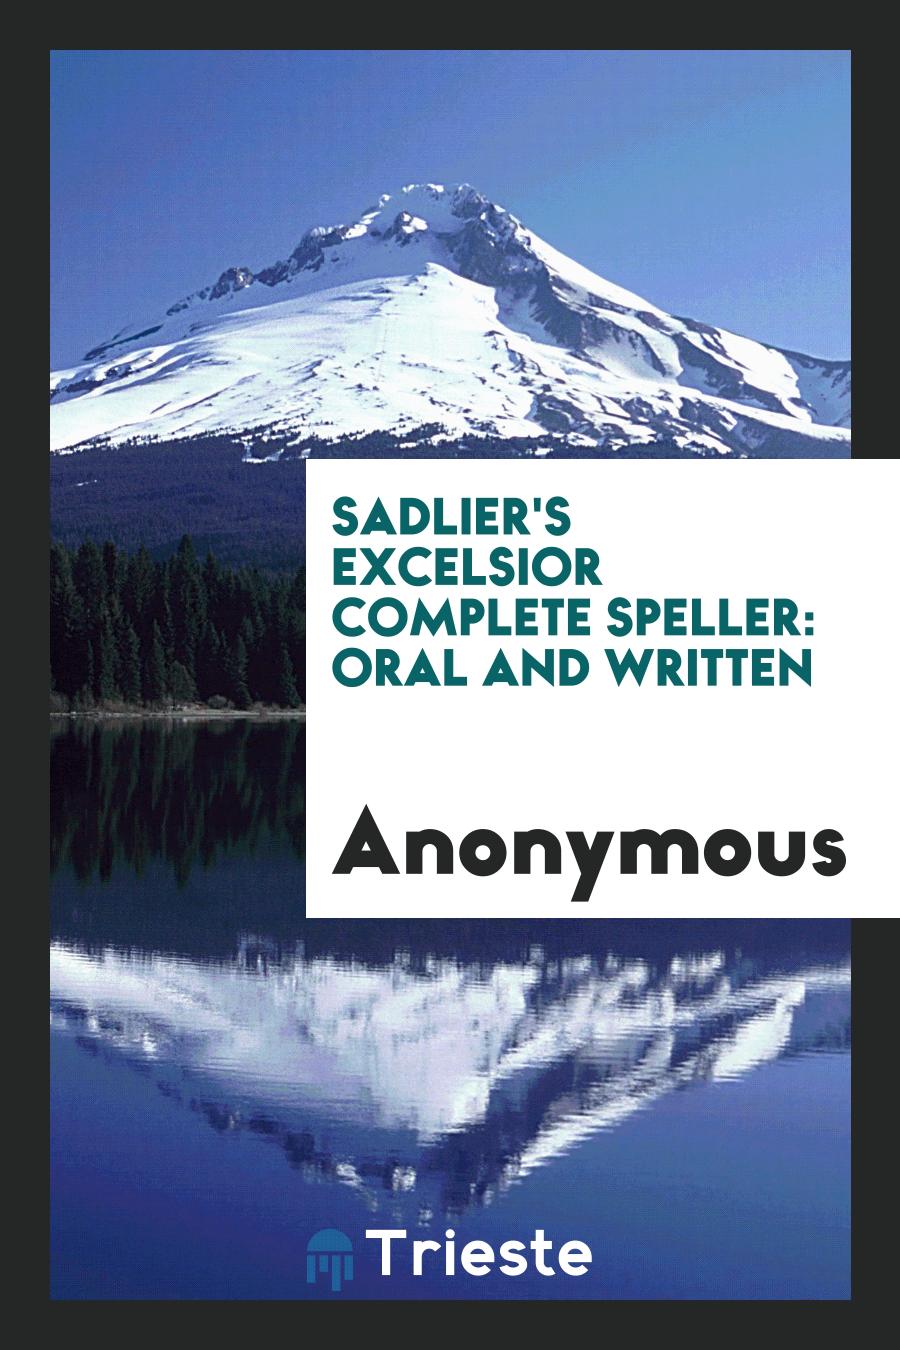 Sadlier's Excelsior Complete Speller: Oral and Written